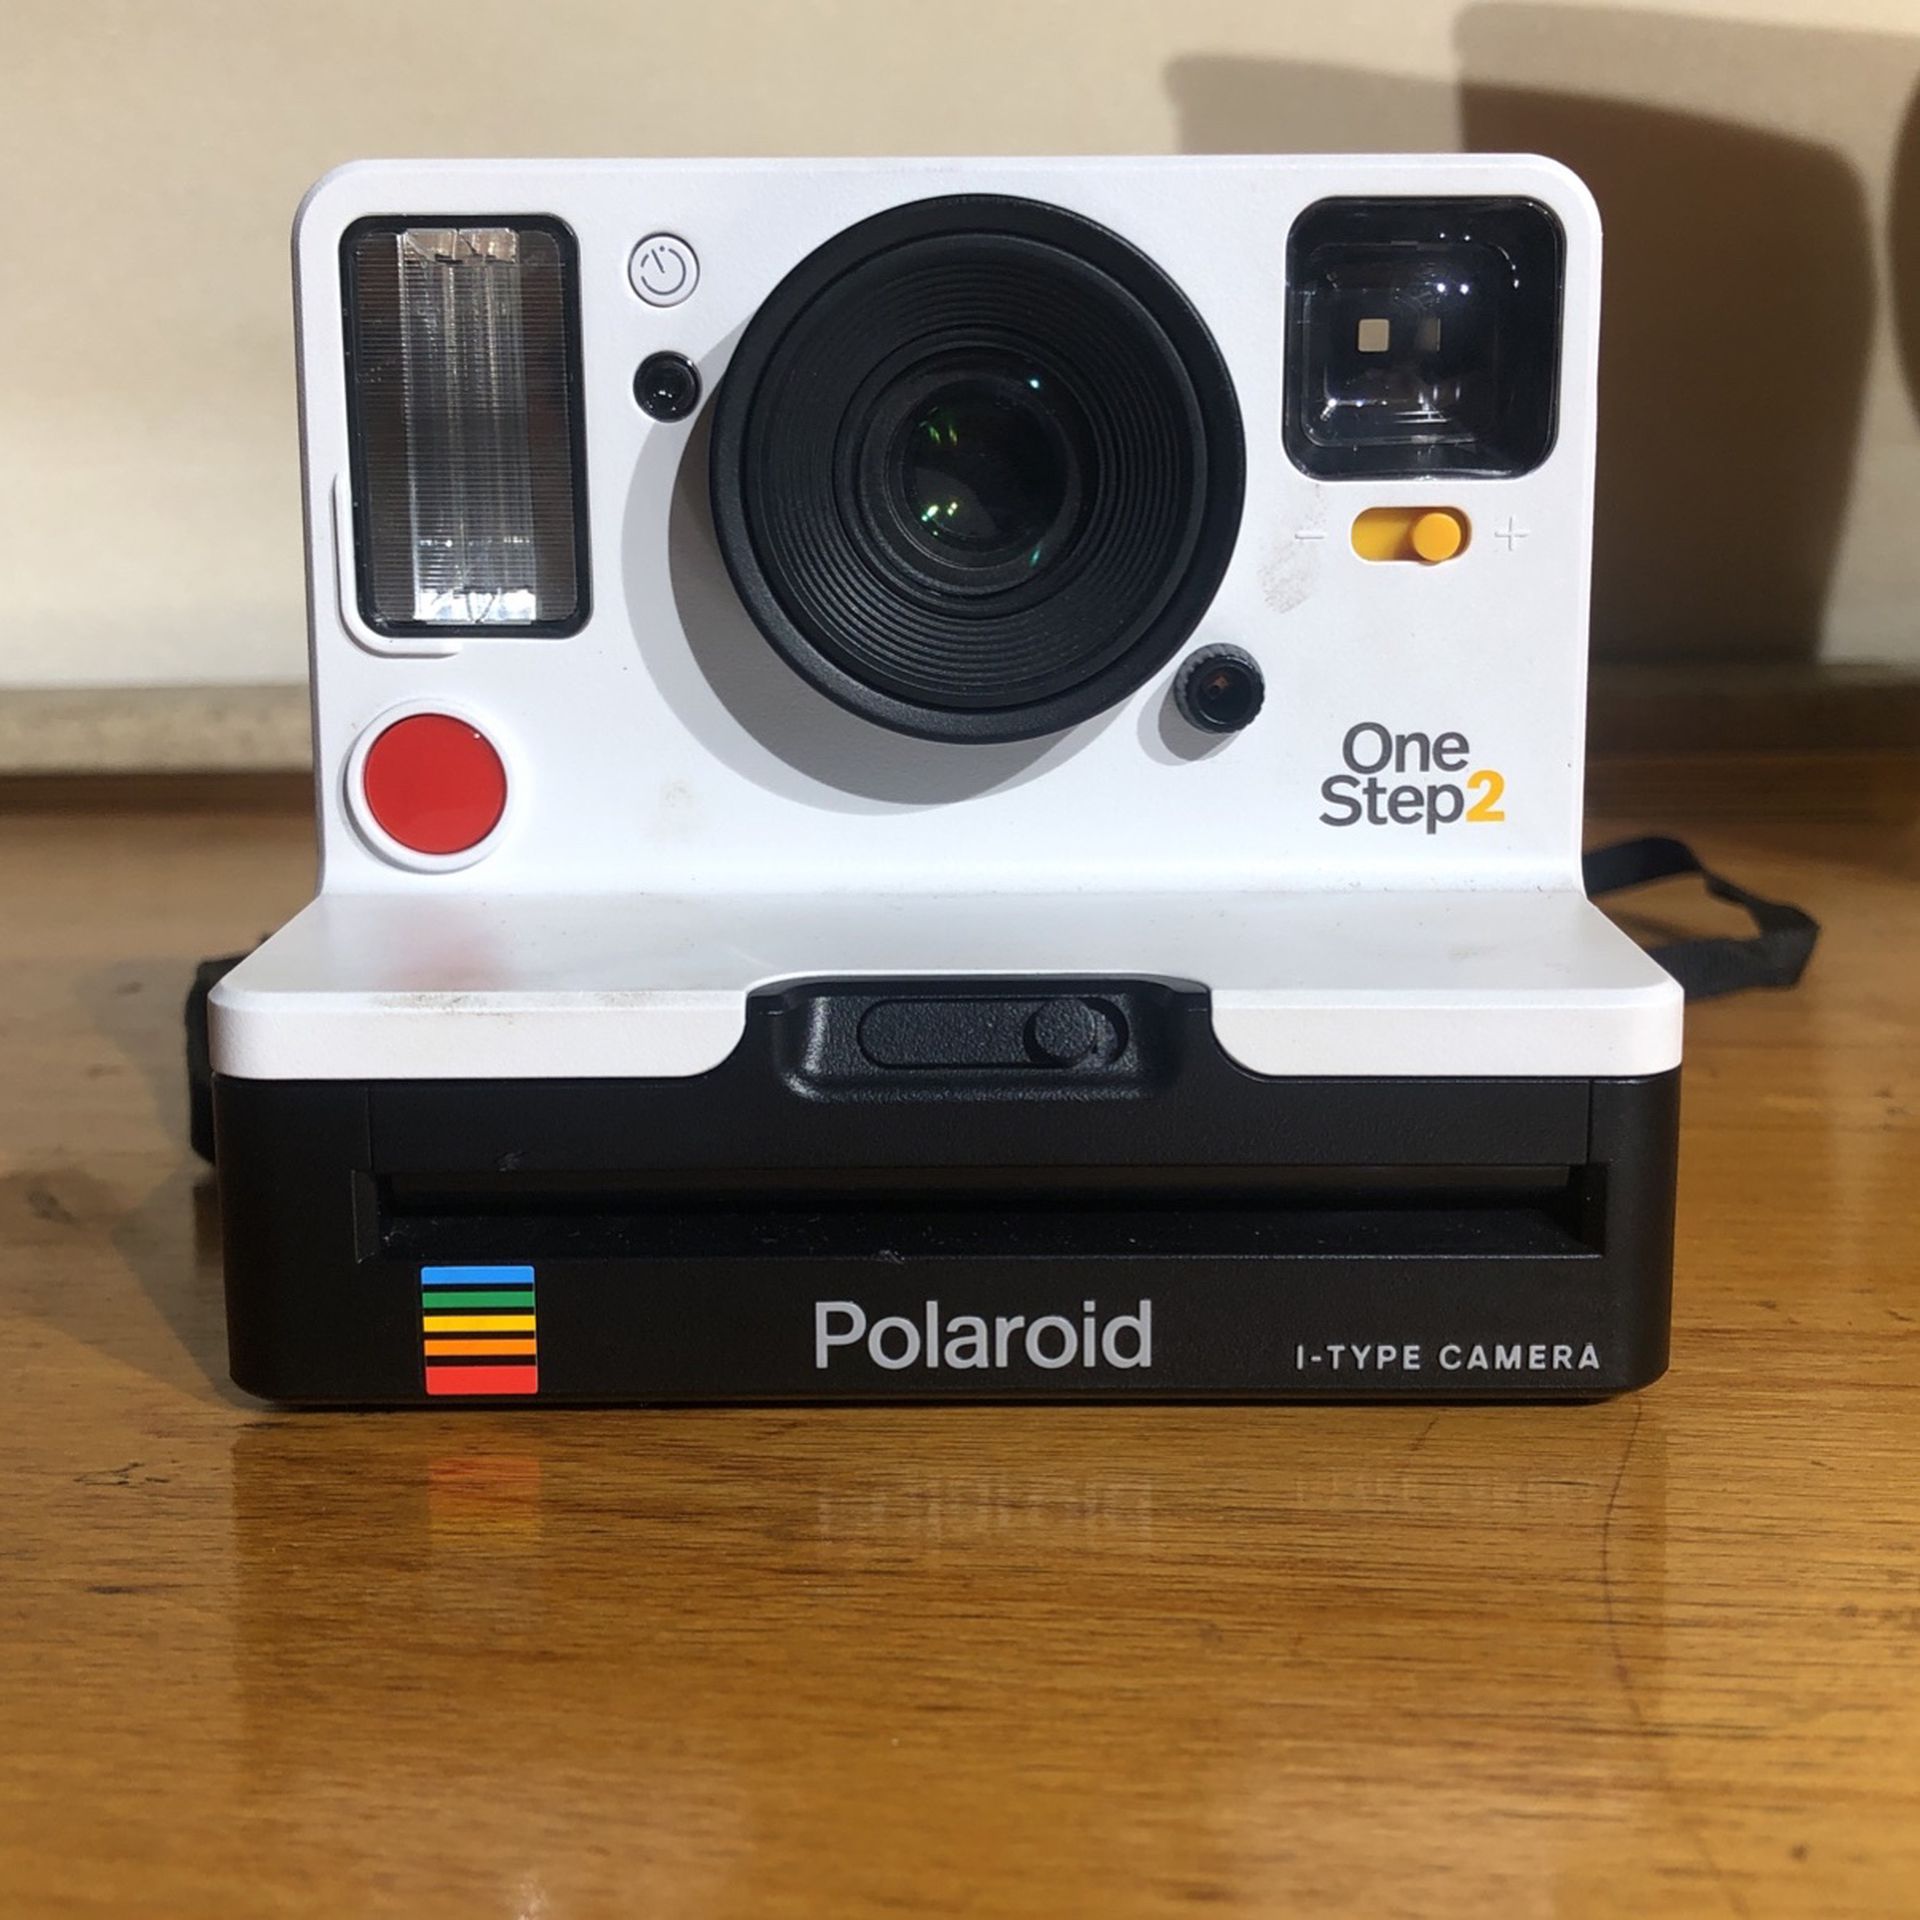 Polaroid One Step 2 Camera - Charges via Mini USB